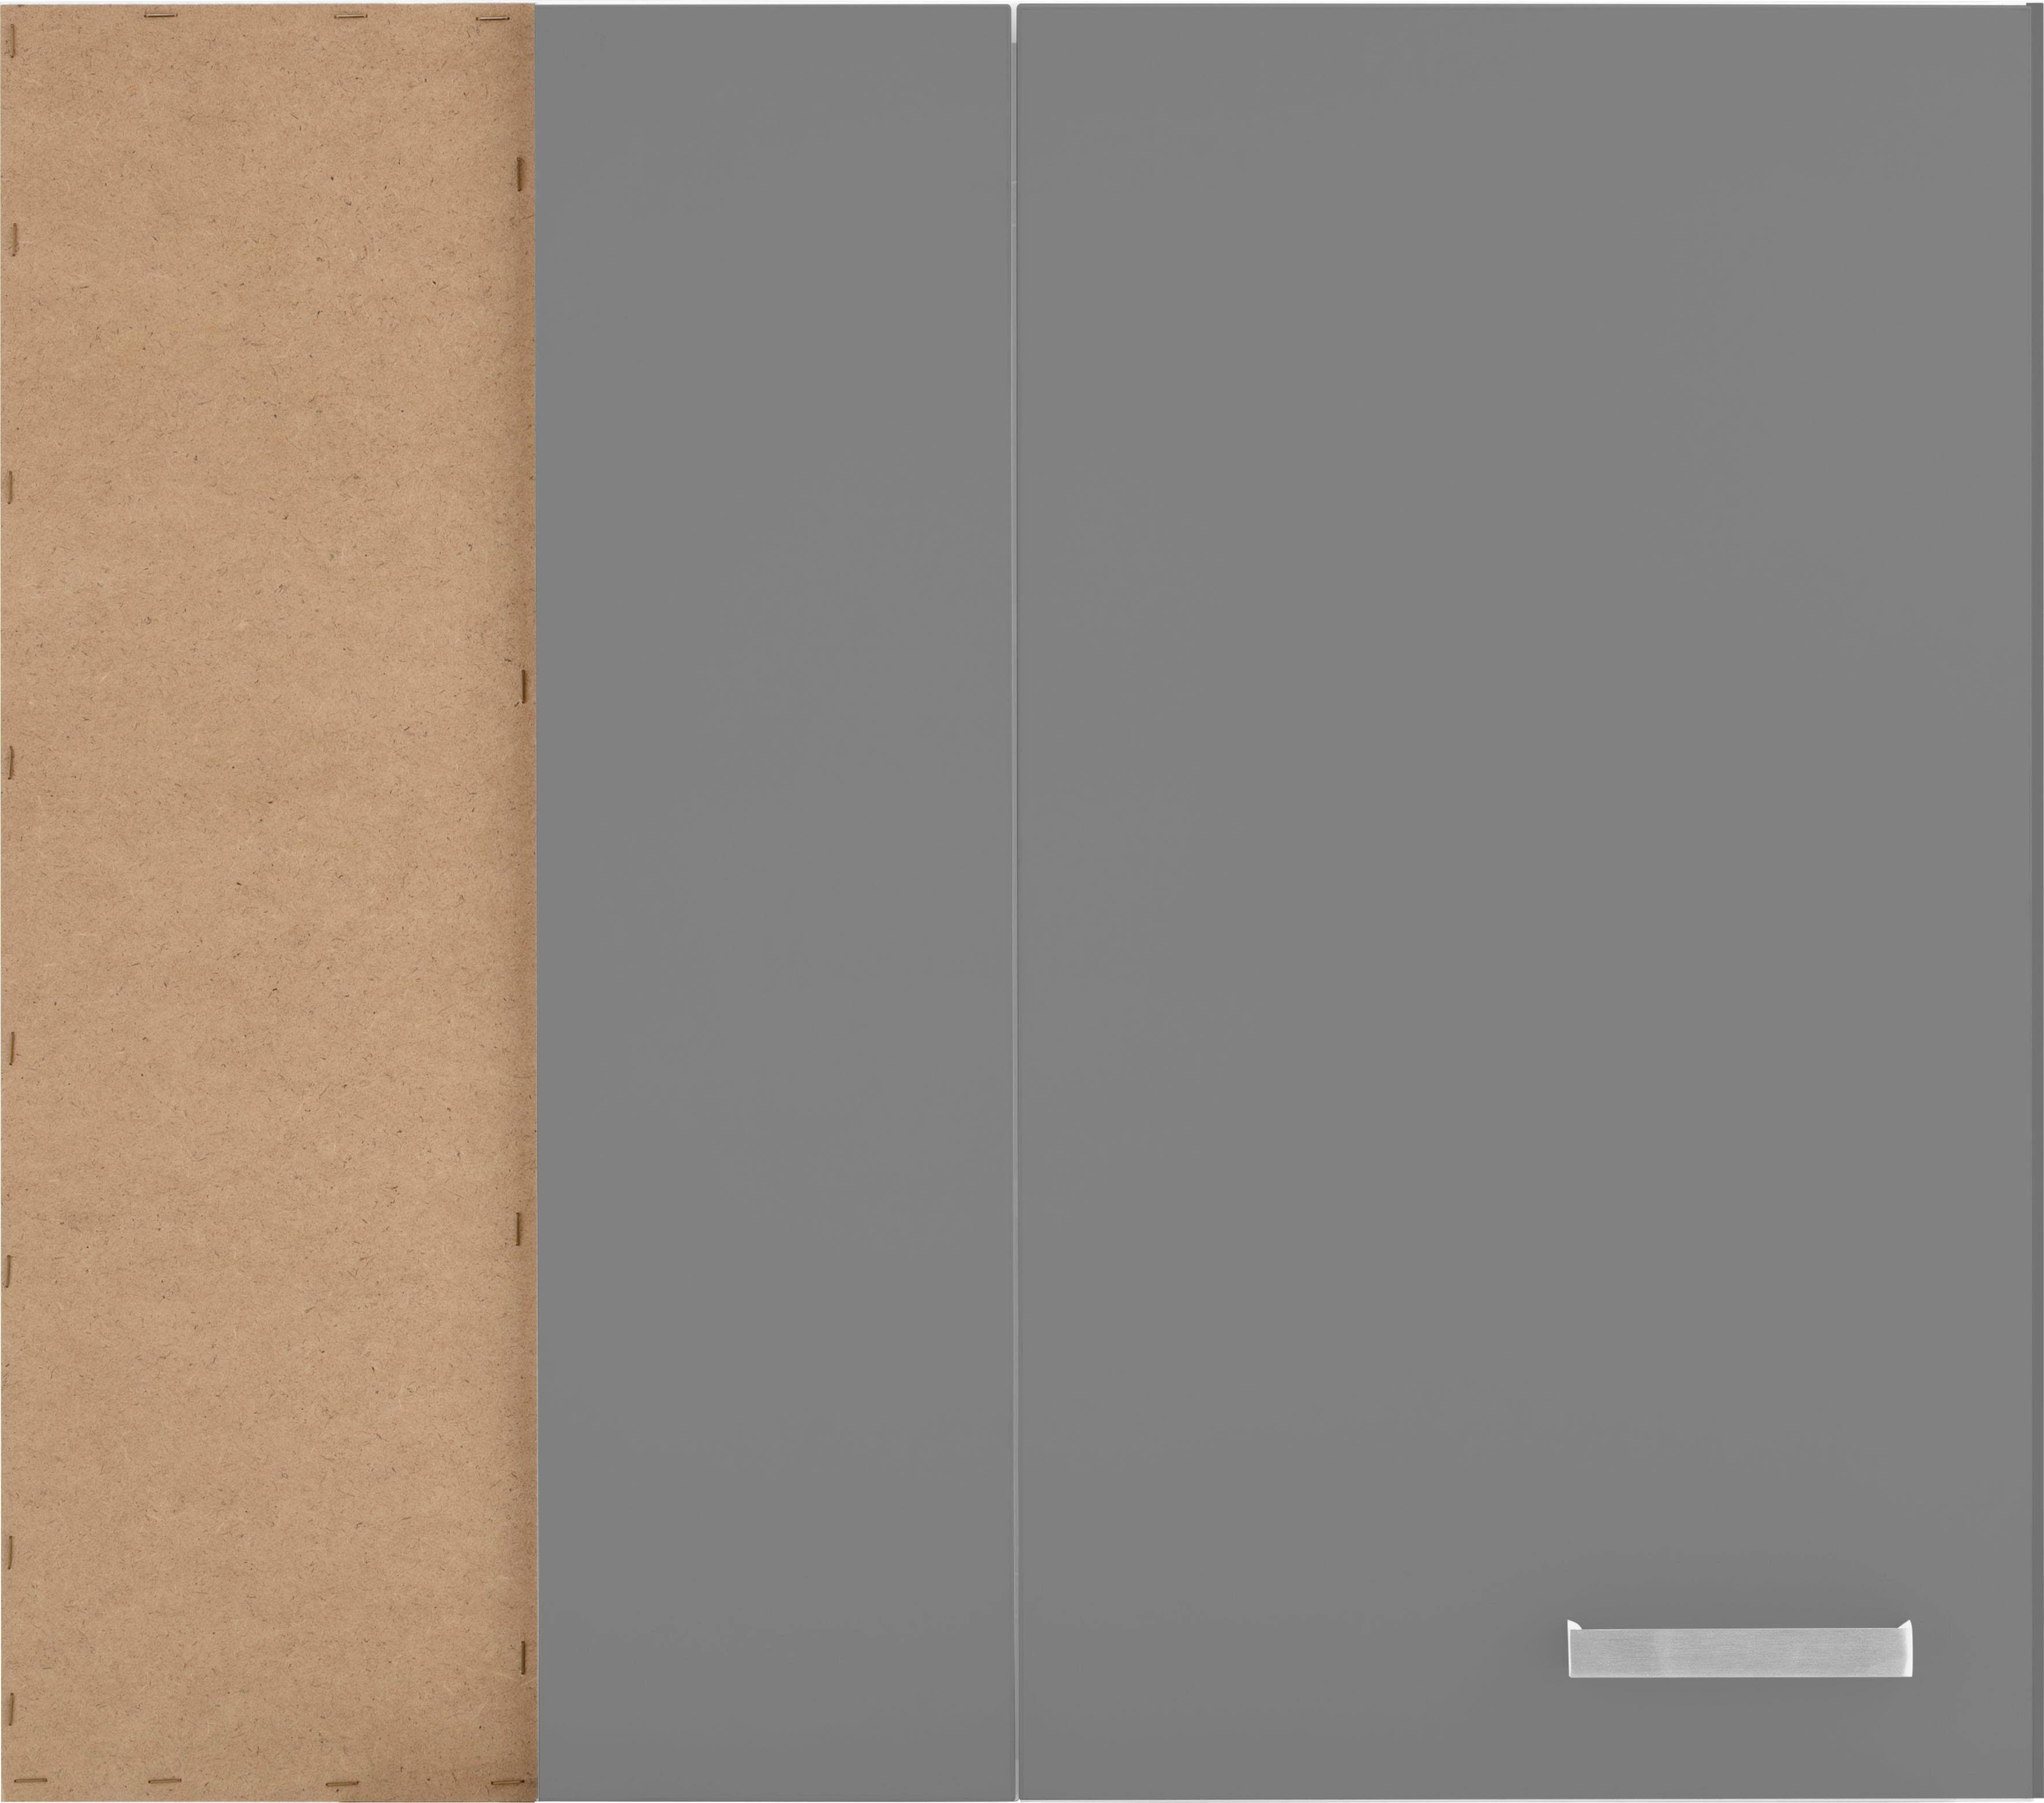 Eckhängeschrank basaltgrau | OPTIFIT x Breite 45 85 cm basaltgrau Parma